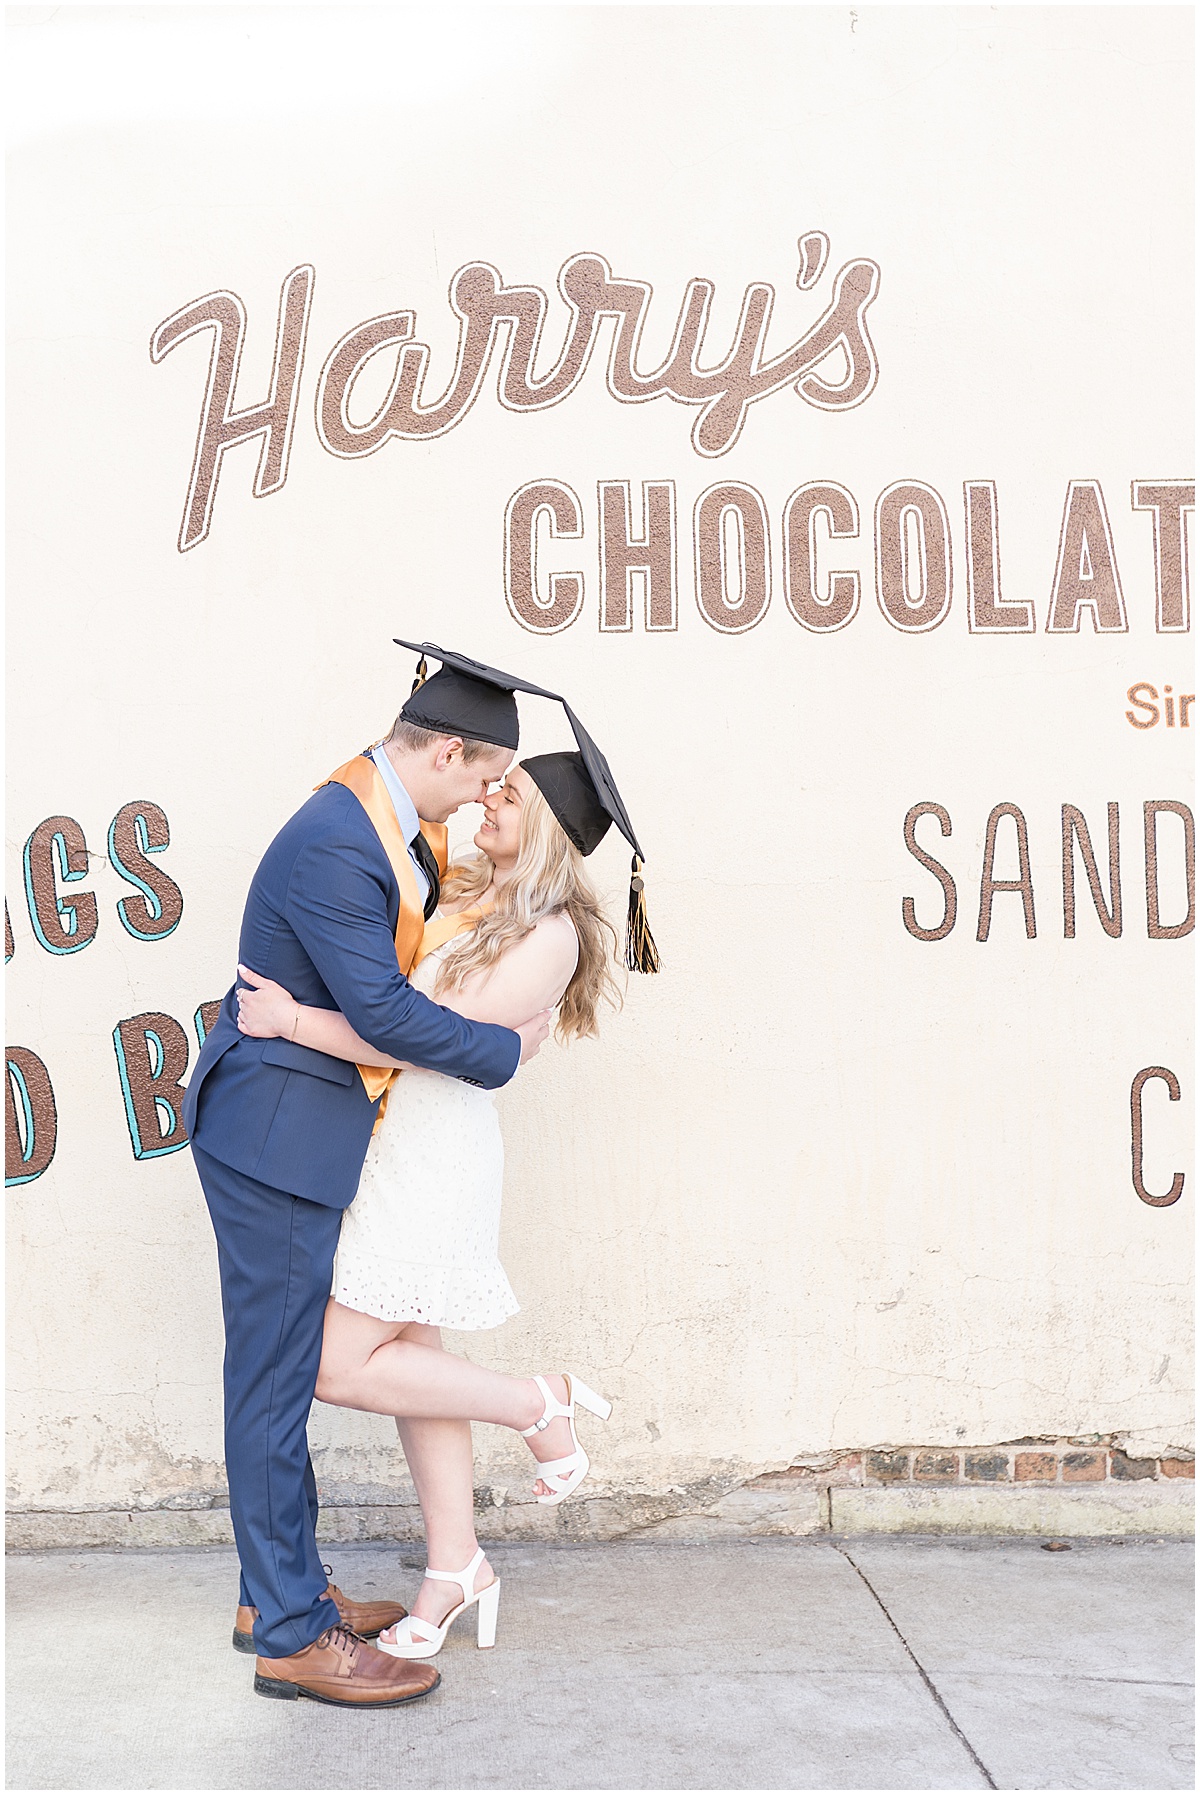 Elyse Kady and Sam Tincher’s Class of 2021 Purdue senior photos at Harry's Chocolate Shop